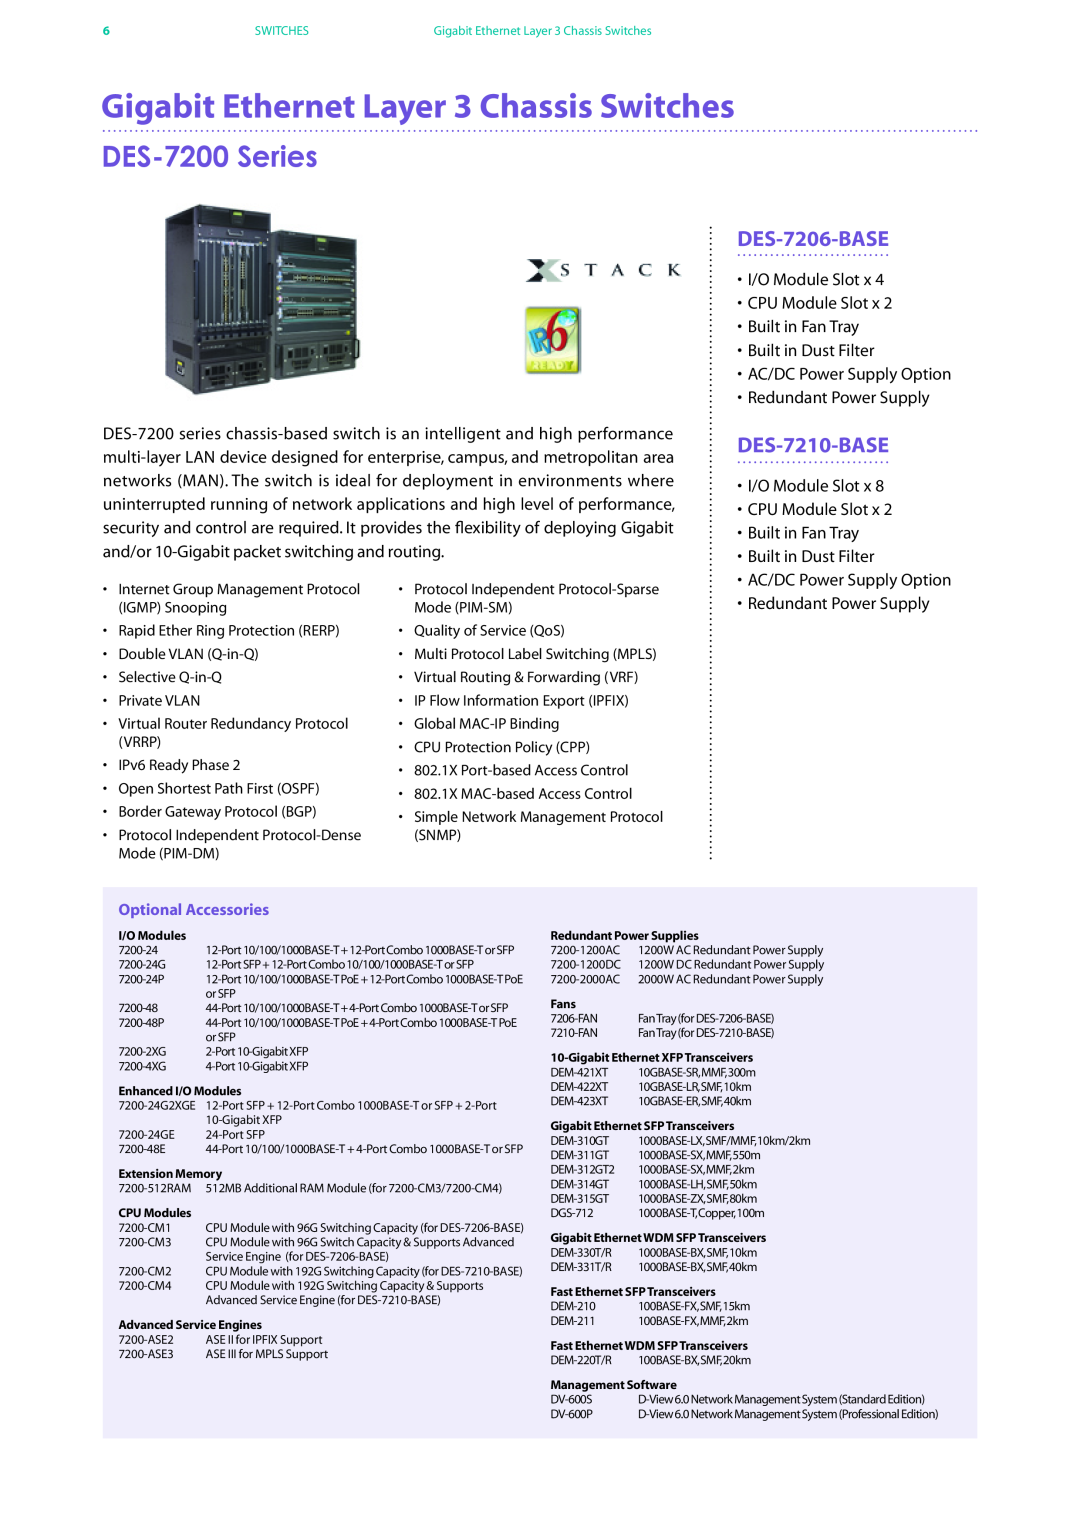 D-Link Gigabit Ethernet Layer 3 Chassis Switches, DES-7200 Series, DES-7206-BASE, DES-7210-BASE, Optional Accessories 